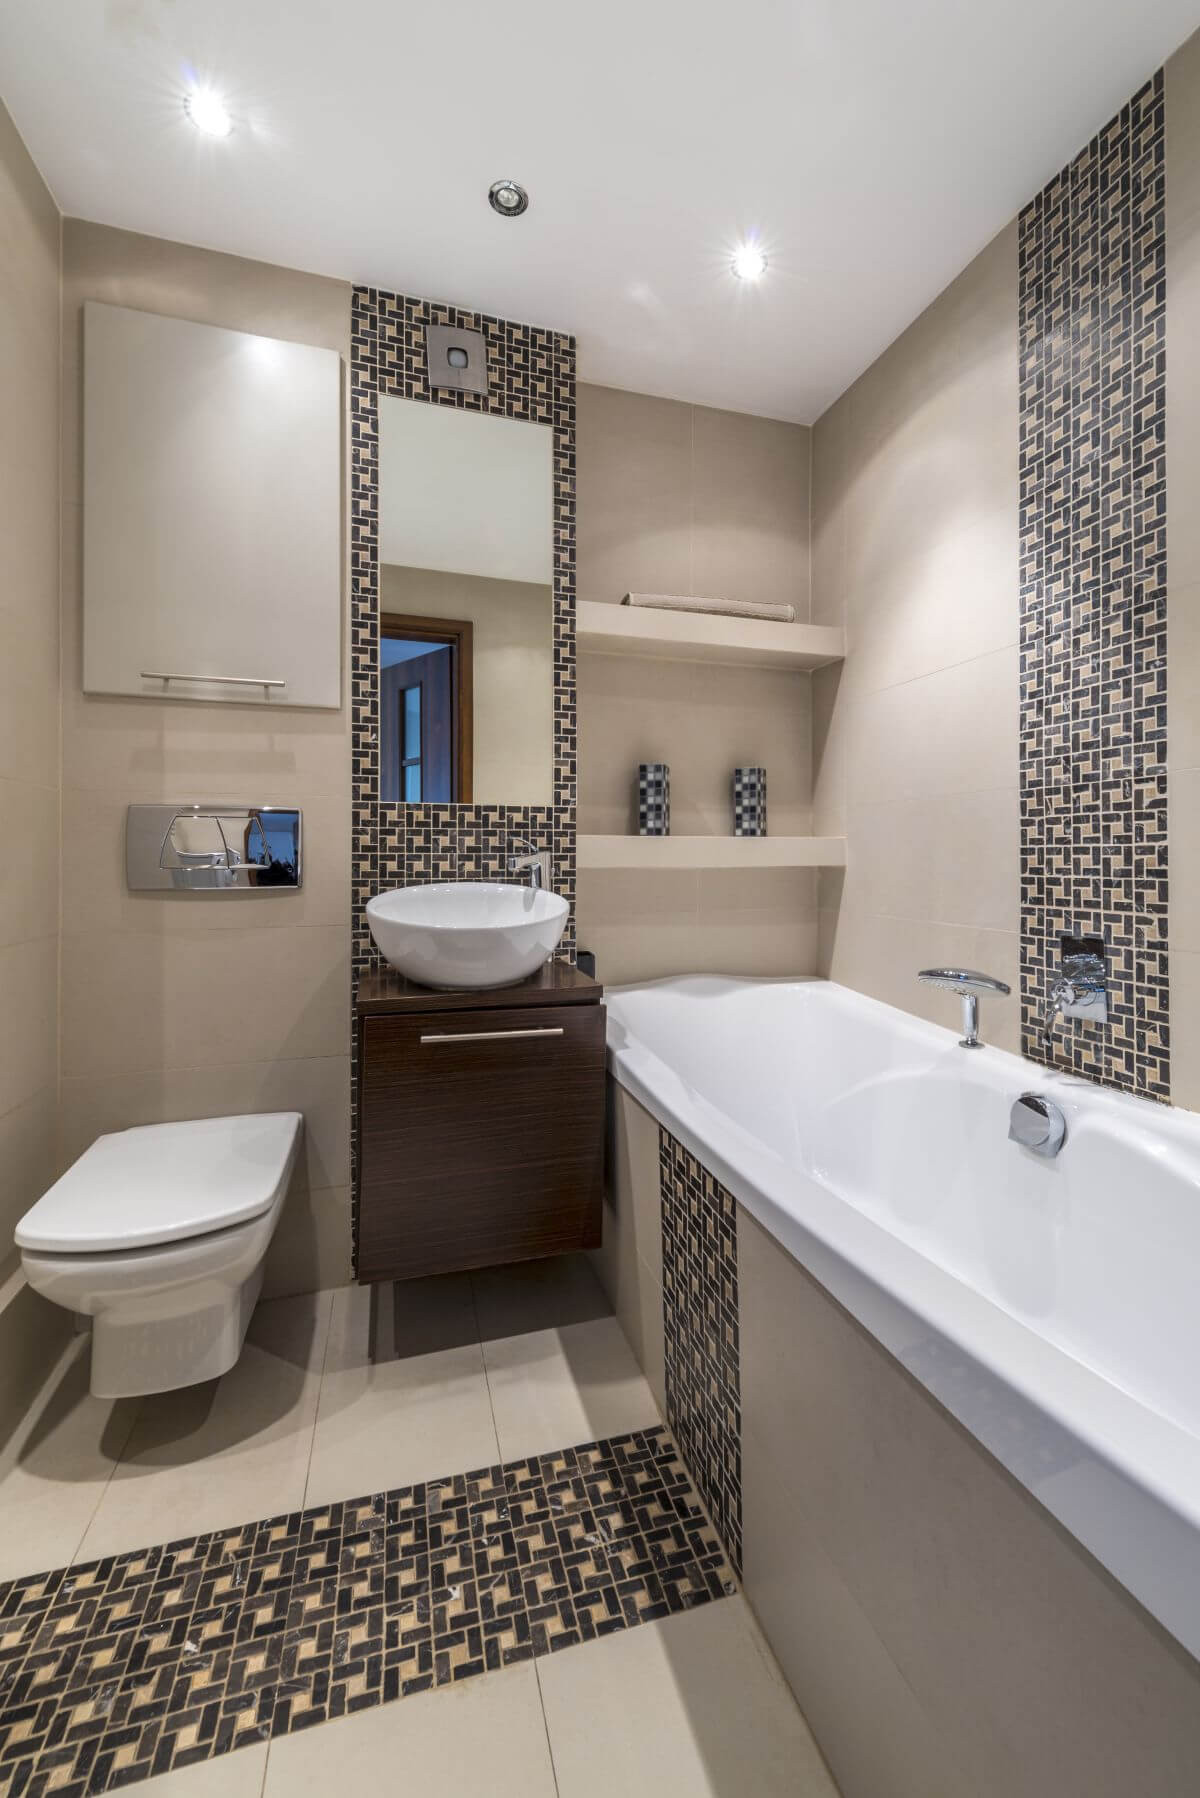 Tiny Bathroom Design
 32 Best Small Bathroom Design Ideas and Decorations for 2019